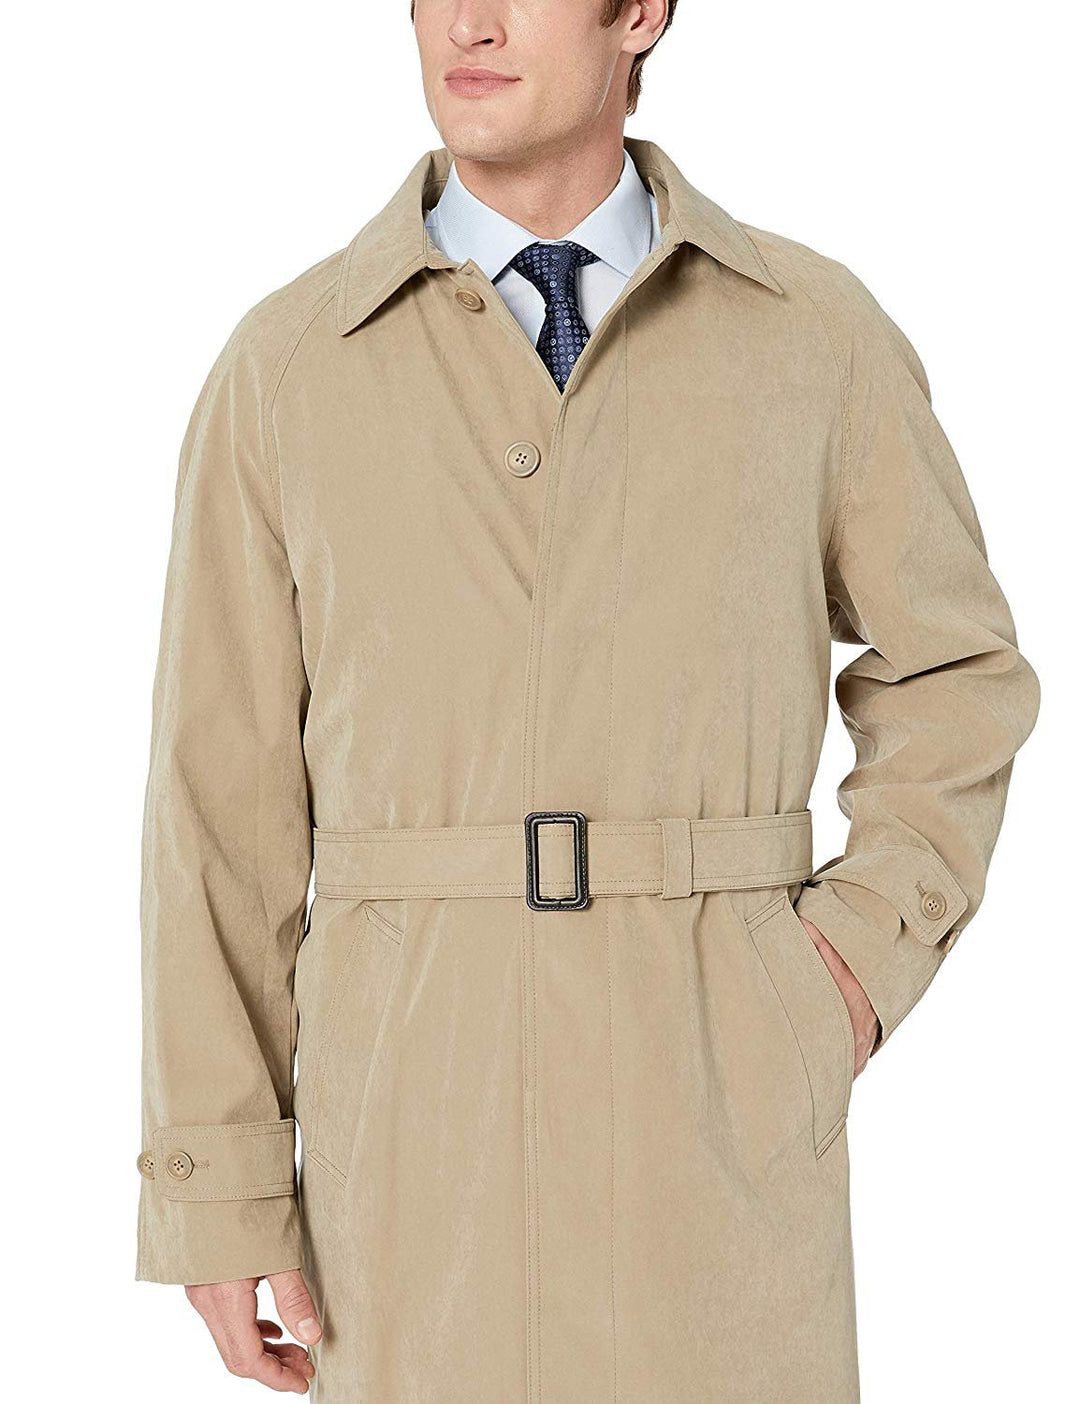 Adam Baker Men's Single Breasted Full Length Trench Coat All Year Round Raincoat